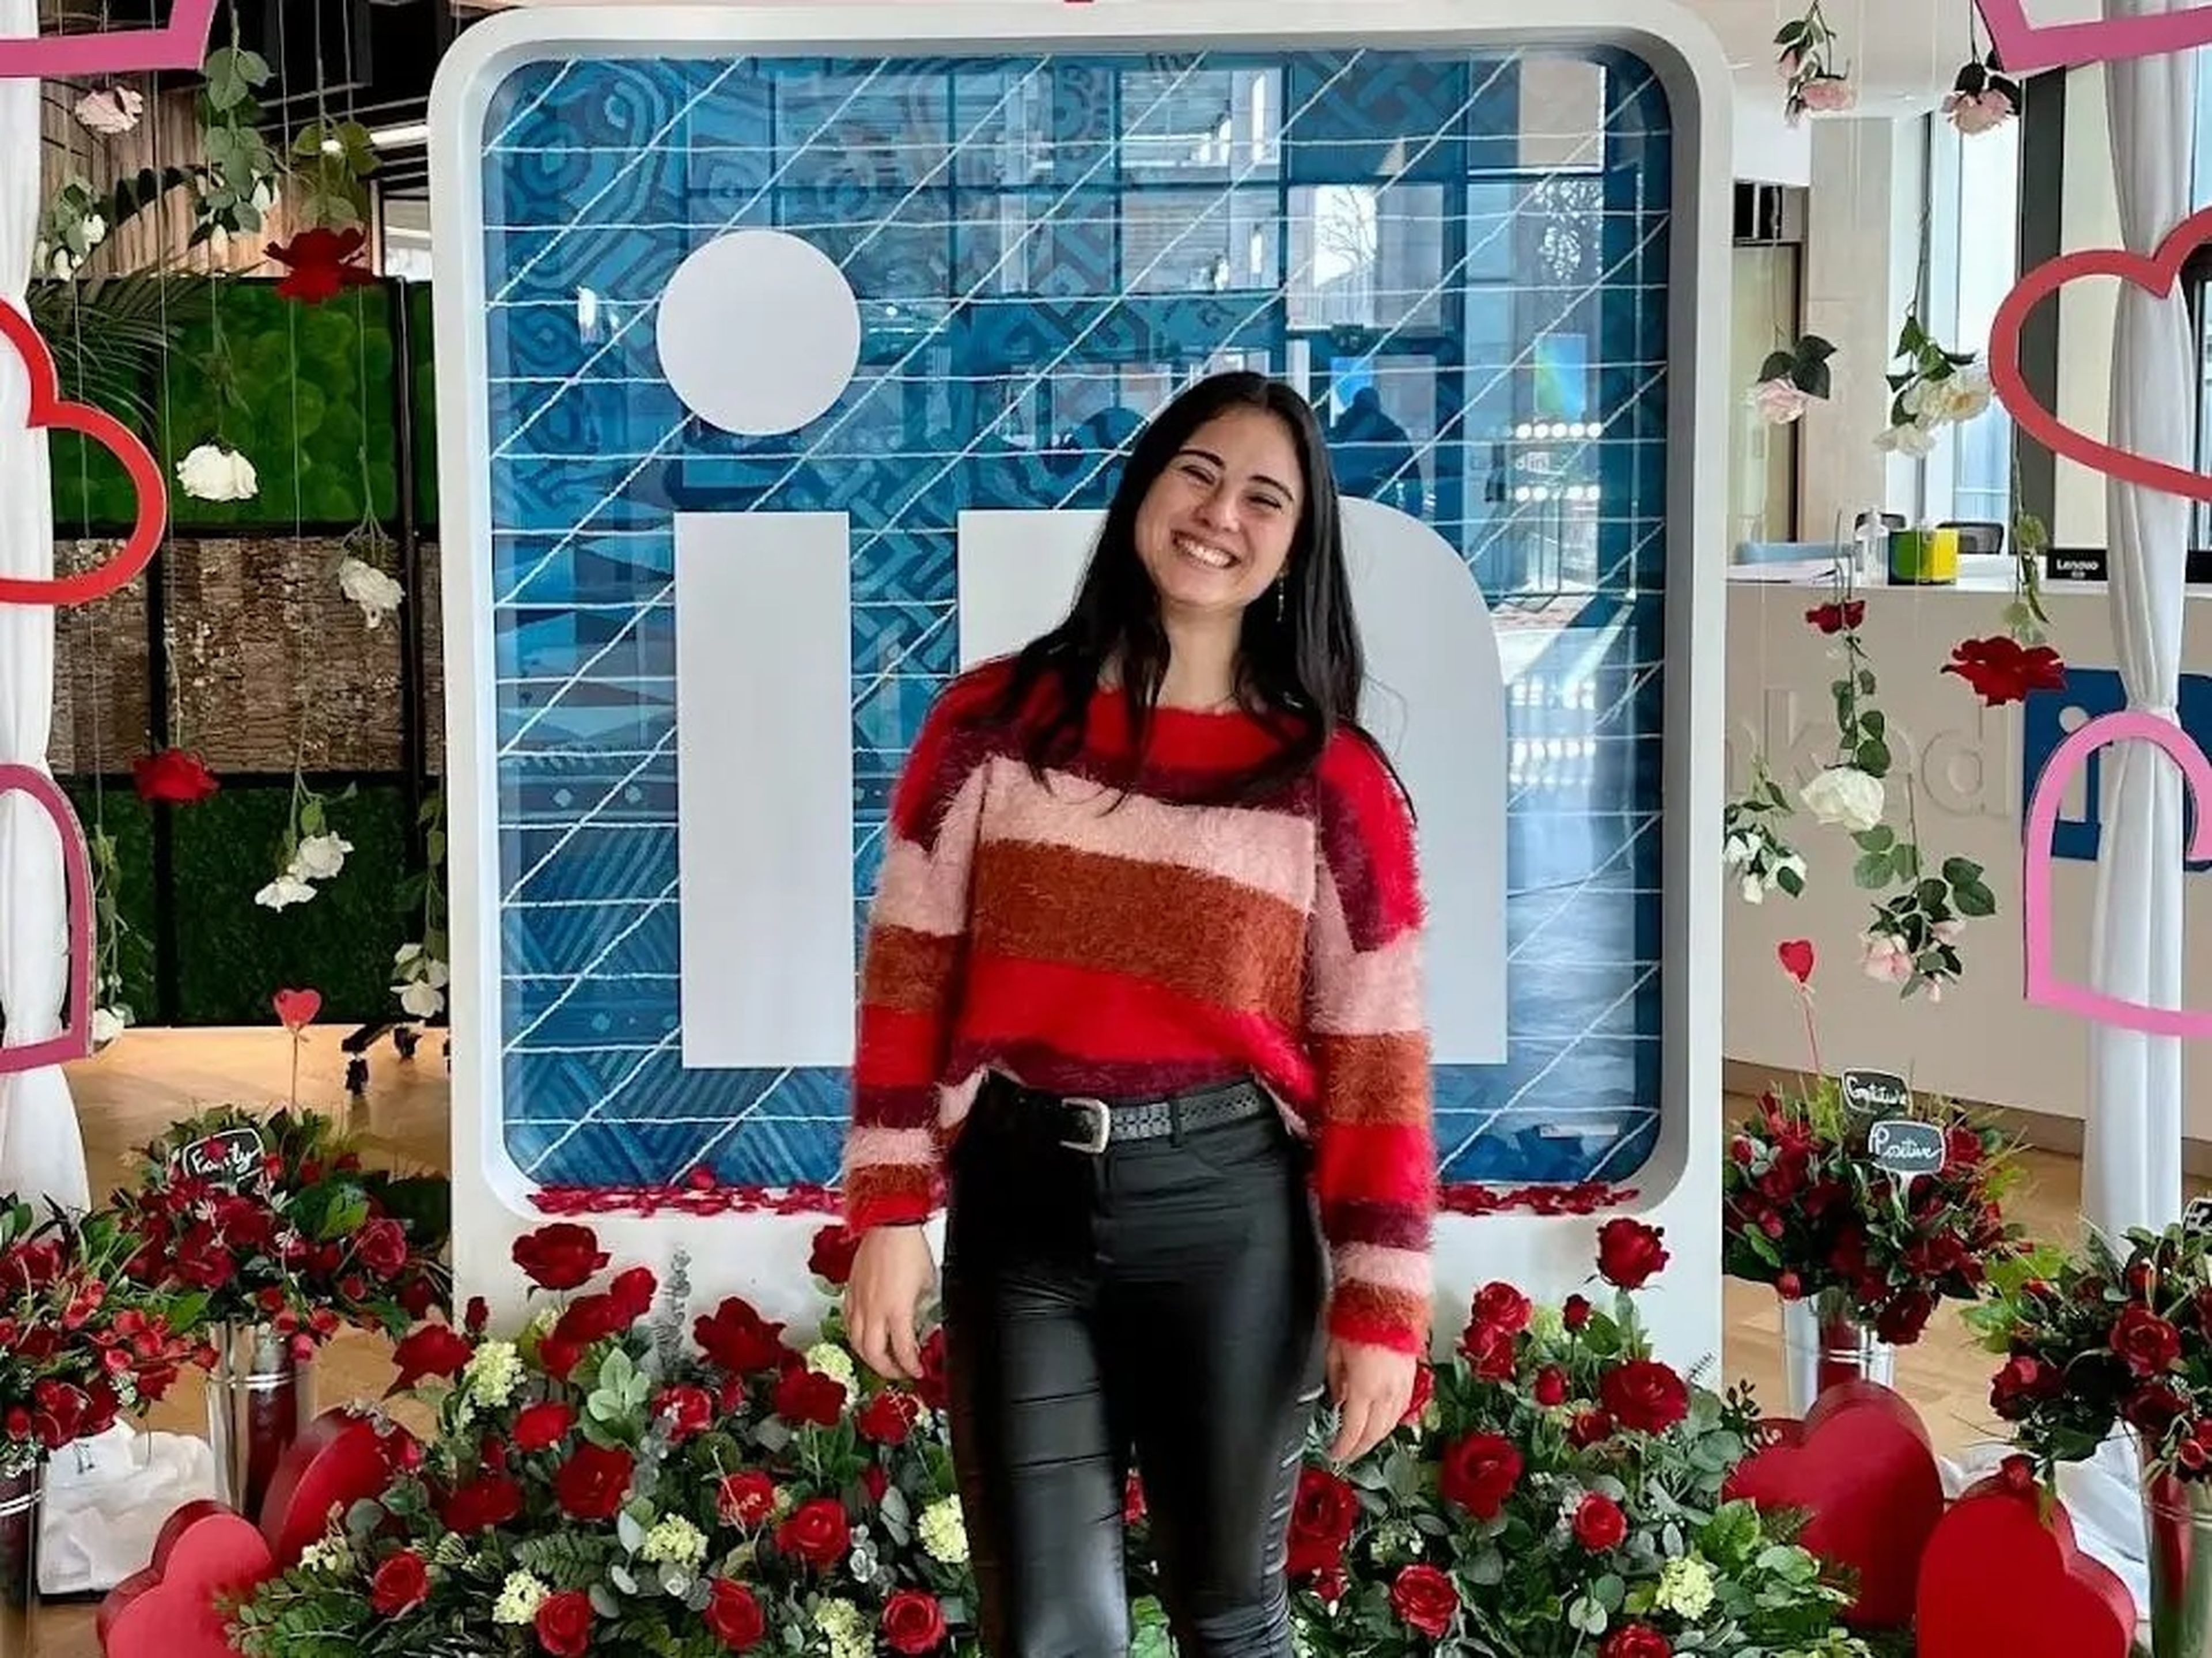 Mariana Kobayashi in front of the LinkedIn logo